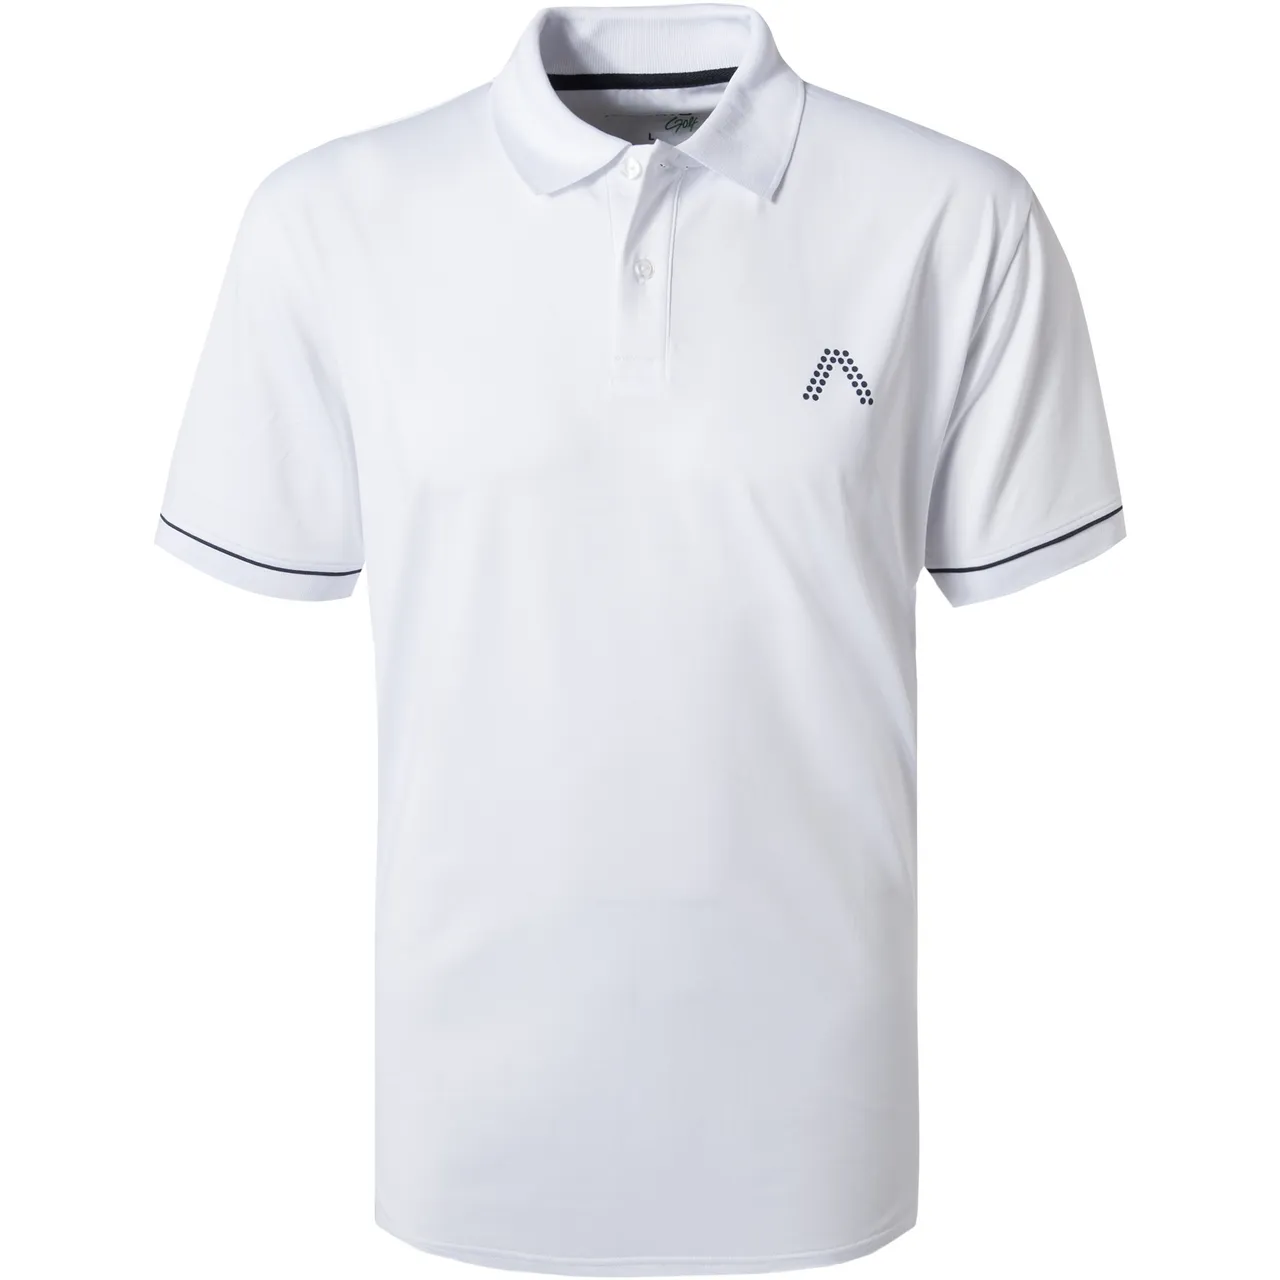 Alberto Golf Herren Polo-Shirt weiß